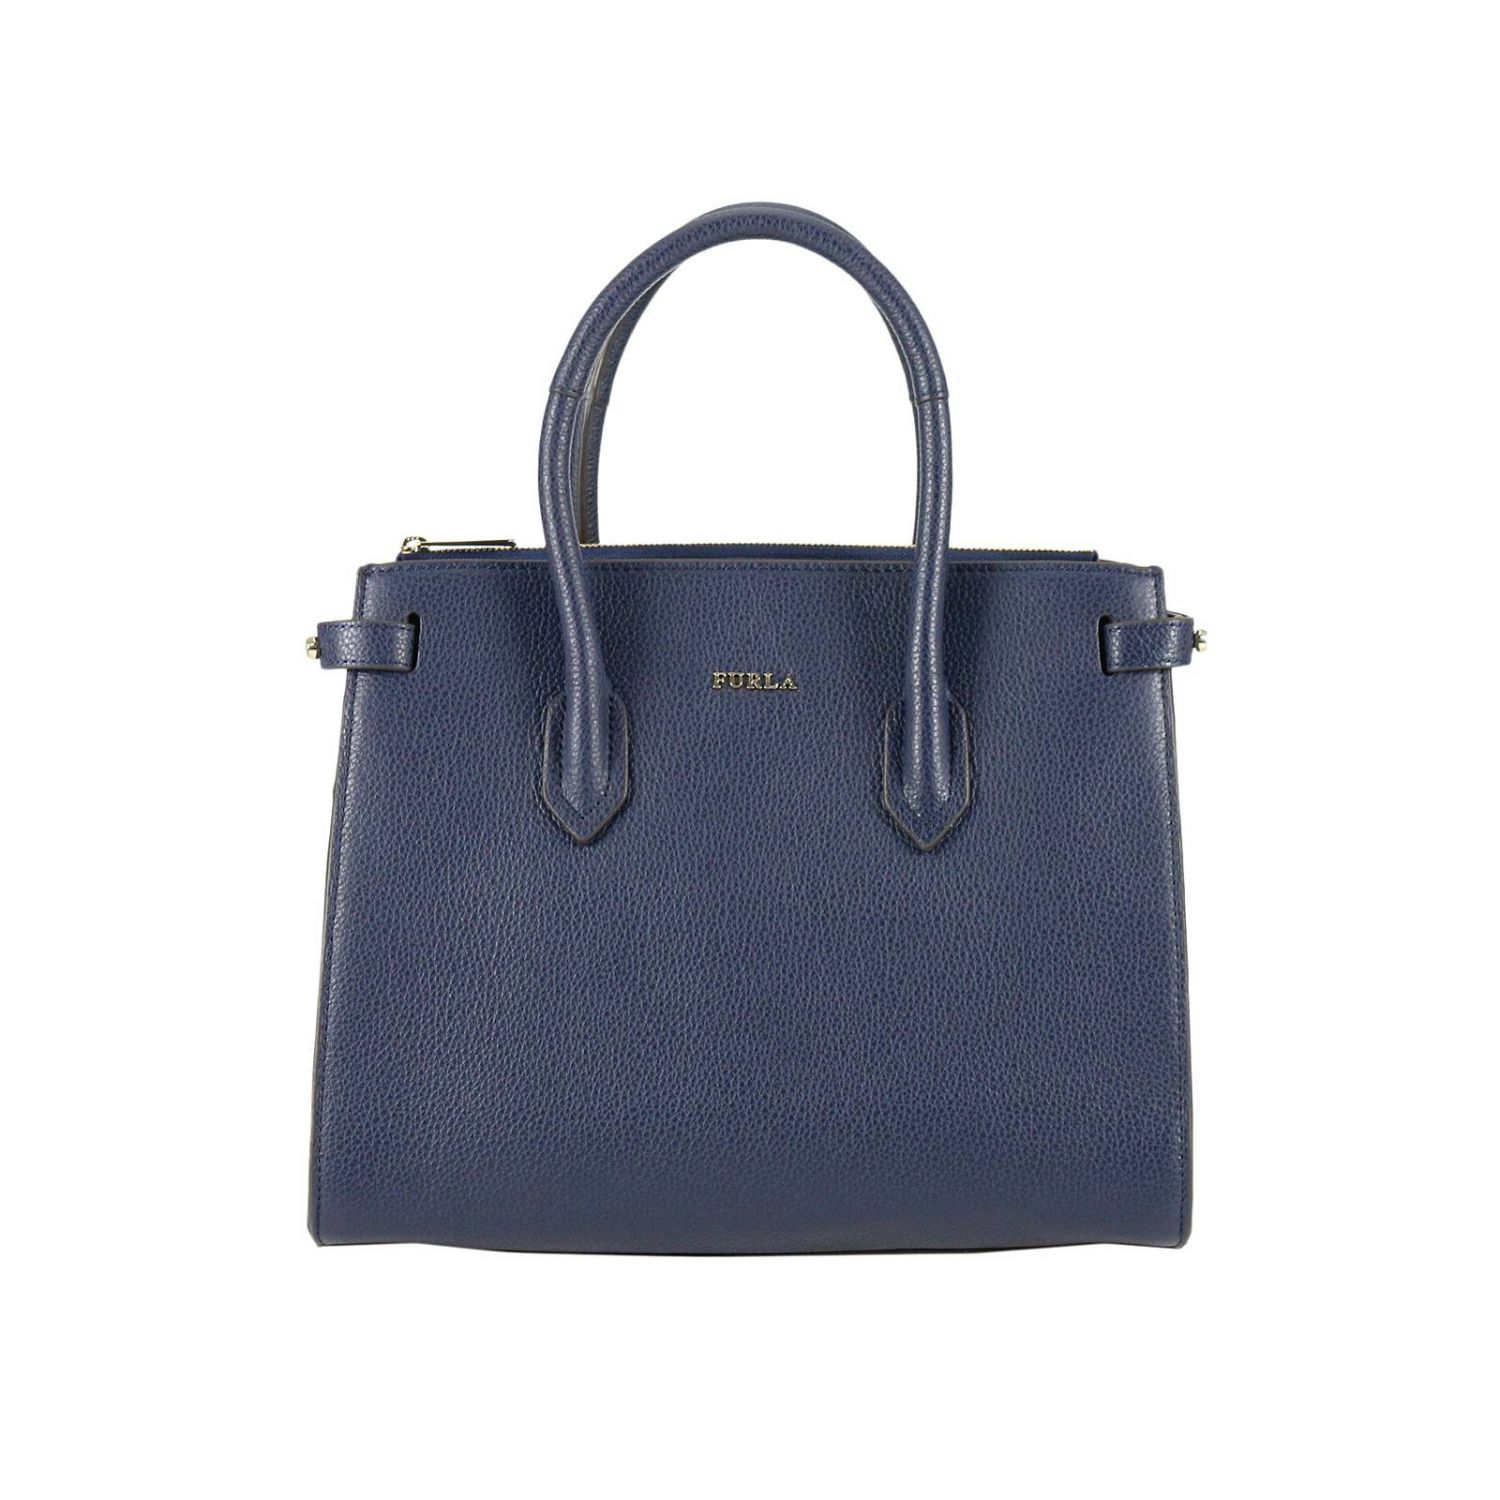 Furla Outlet: Shoulder bag women | Handbag Furla Women Blue | Handbag ...